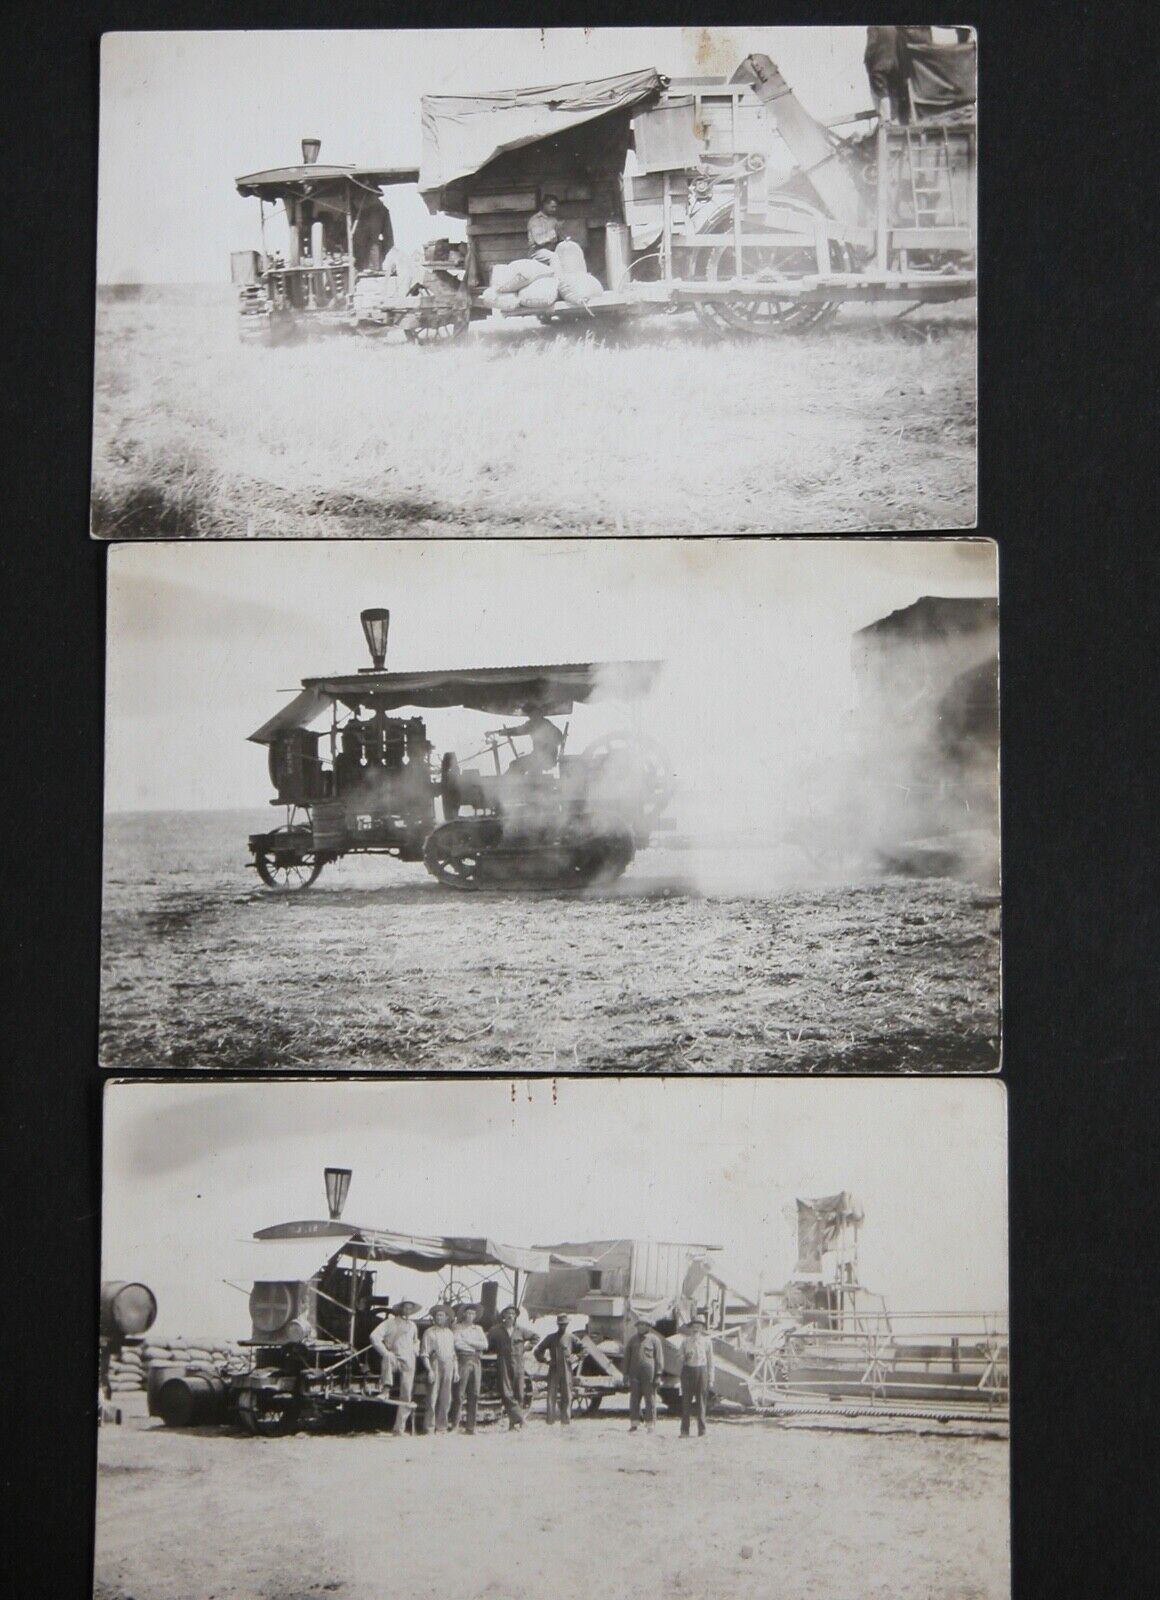 Vintage Photo Steam Engine Plowing Plow Crew Set of 3 Photographs 1900s Farming